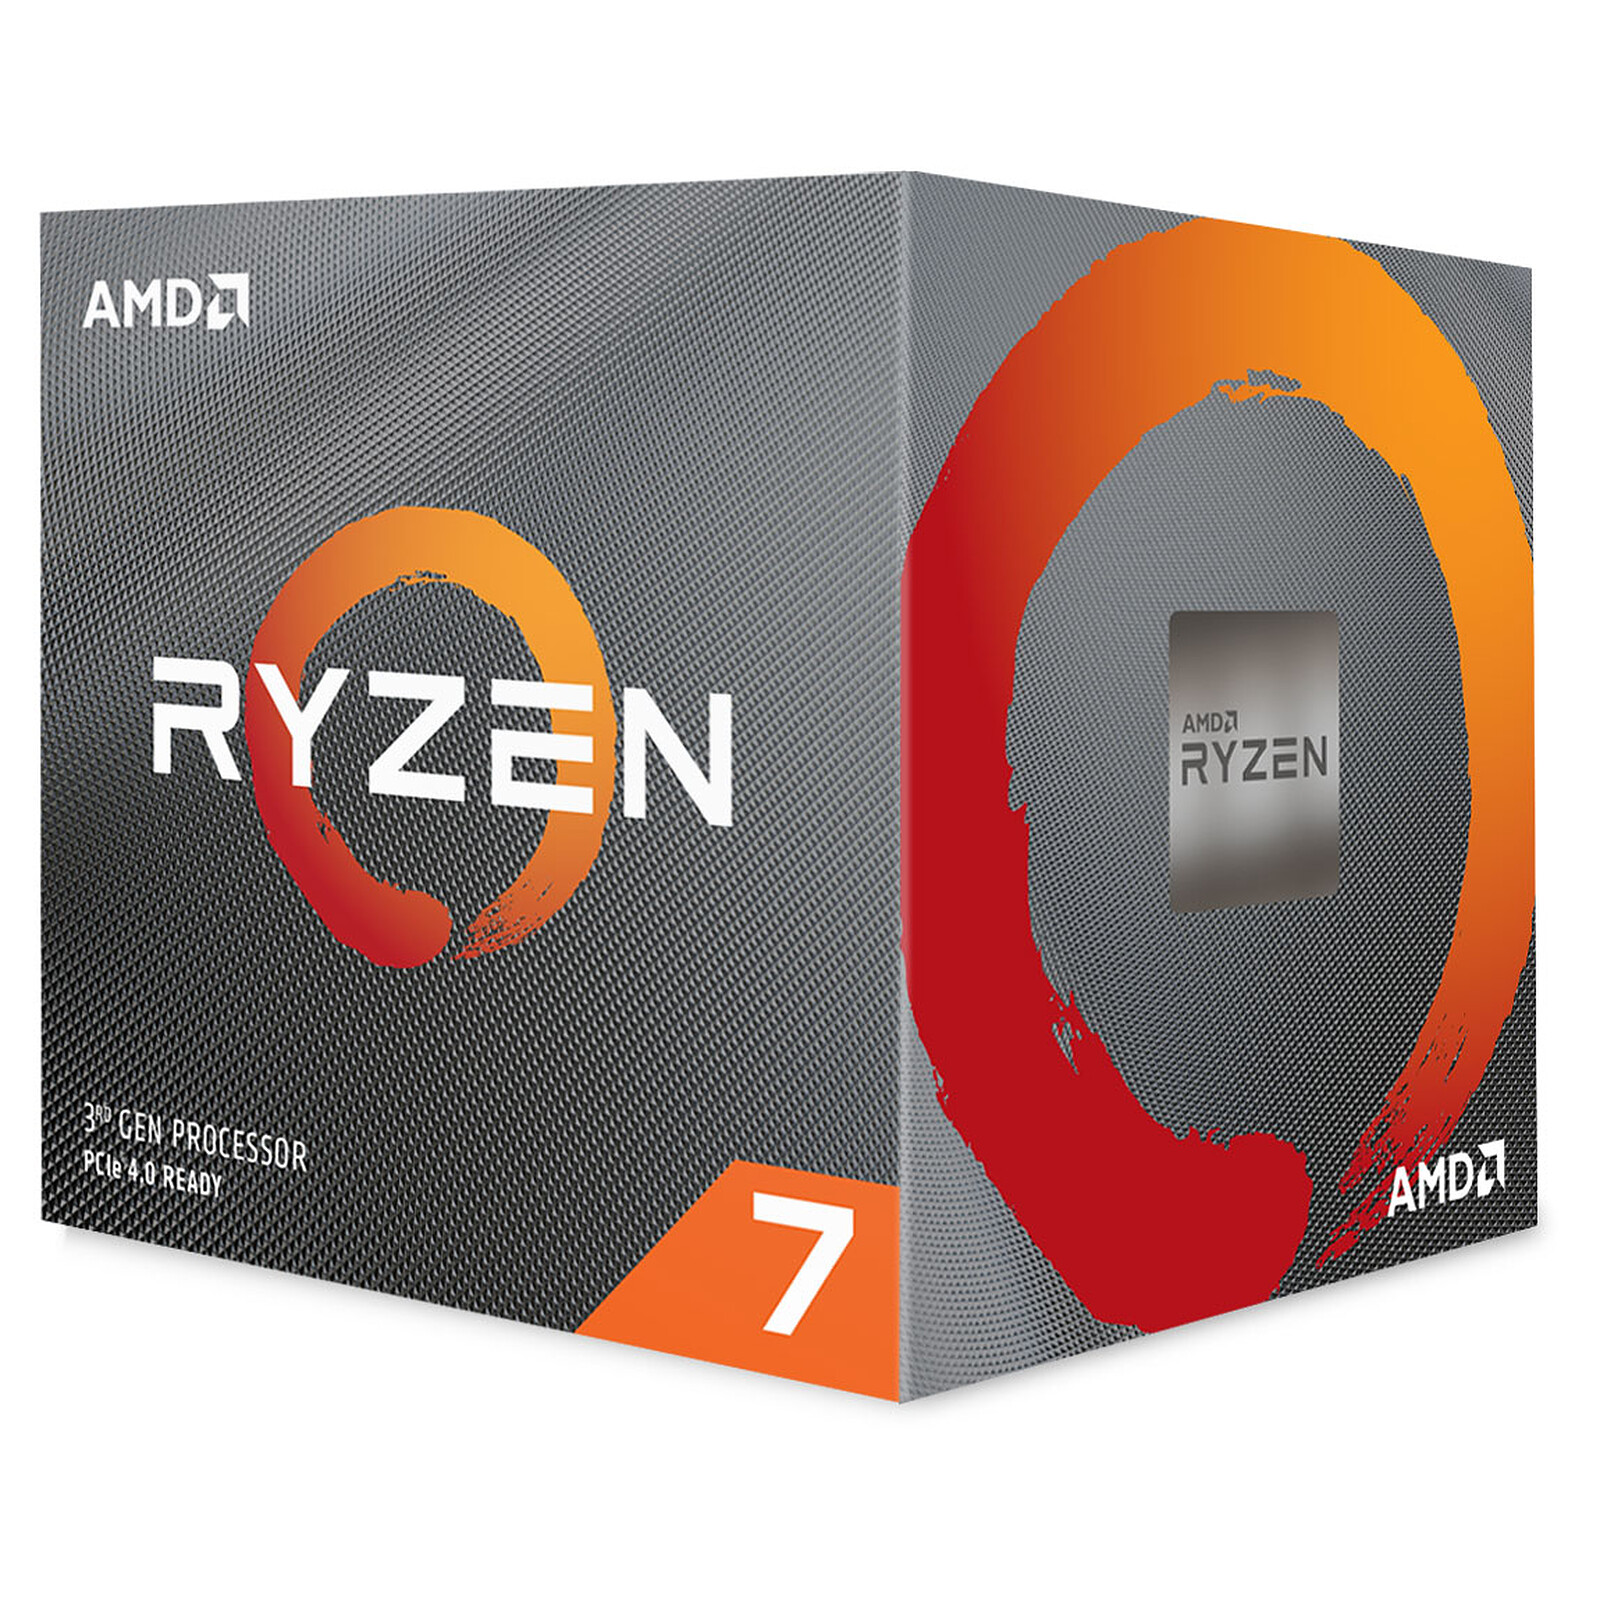 AMD Ryzen 9 5950X CPU Processor AM4 16 Core 32 Thread 4.9GHz 105W Up to  3200MHz